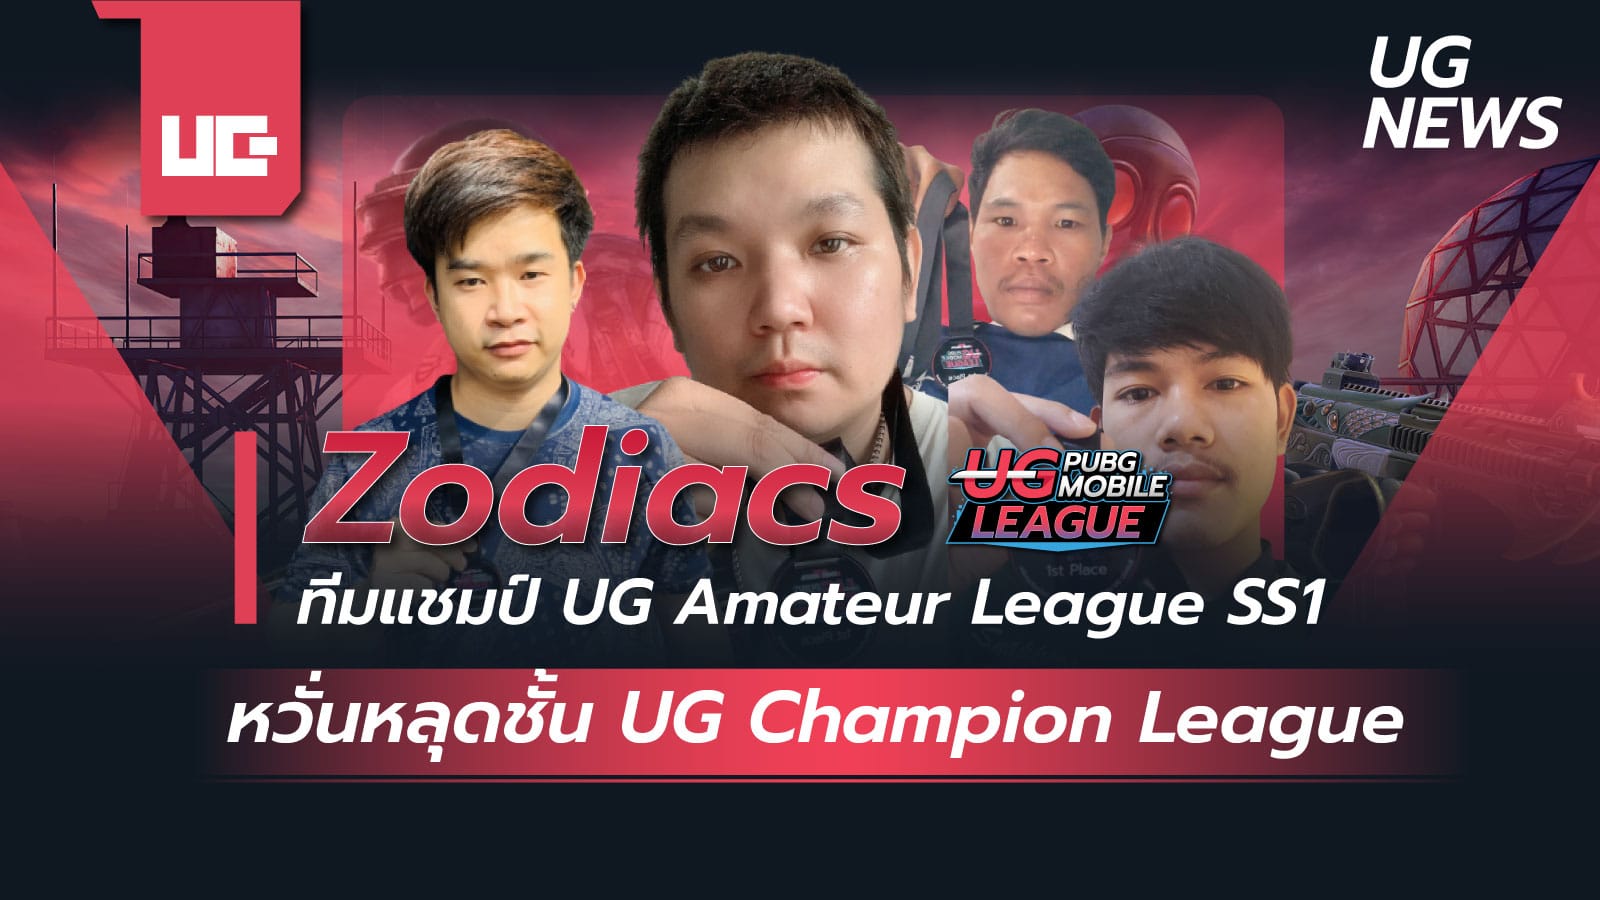 Zodiacs ทีมแชมป์ UG Amateur League SS1 หวั่นหลุดชั้น UG Champion League